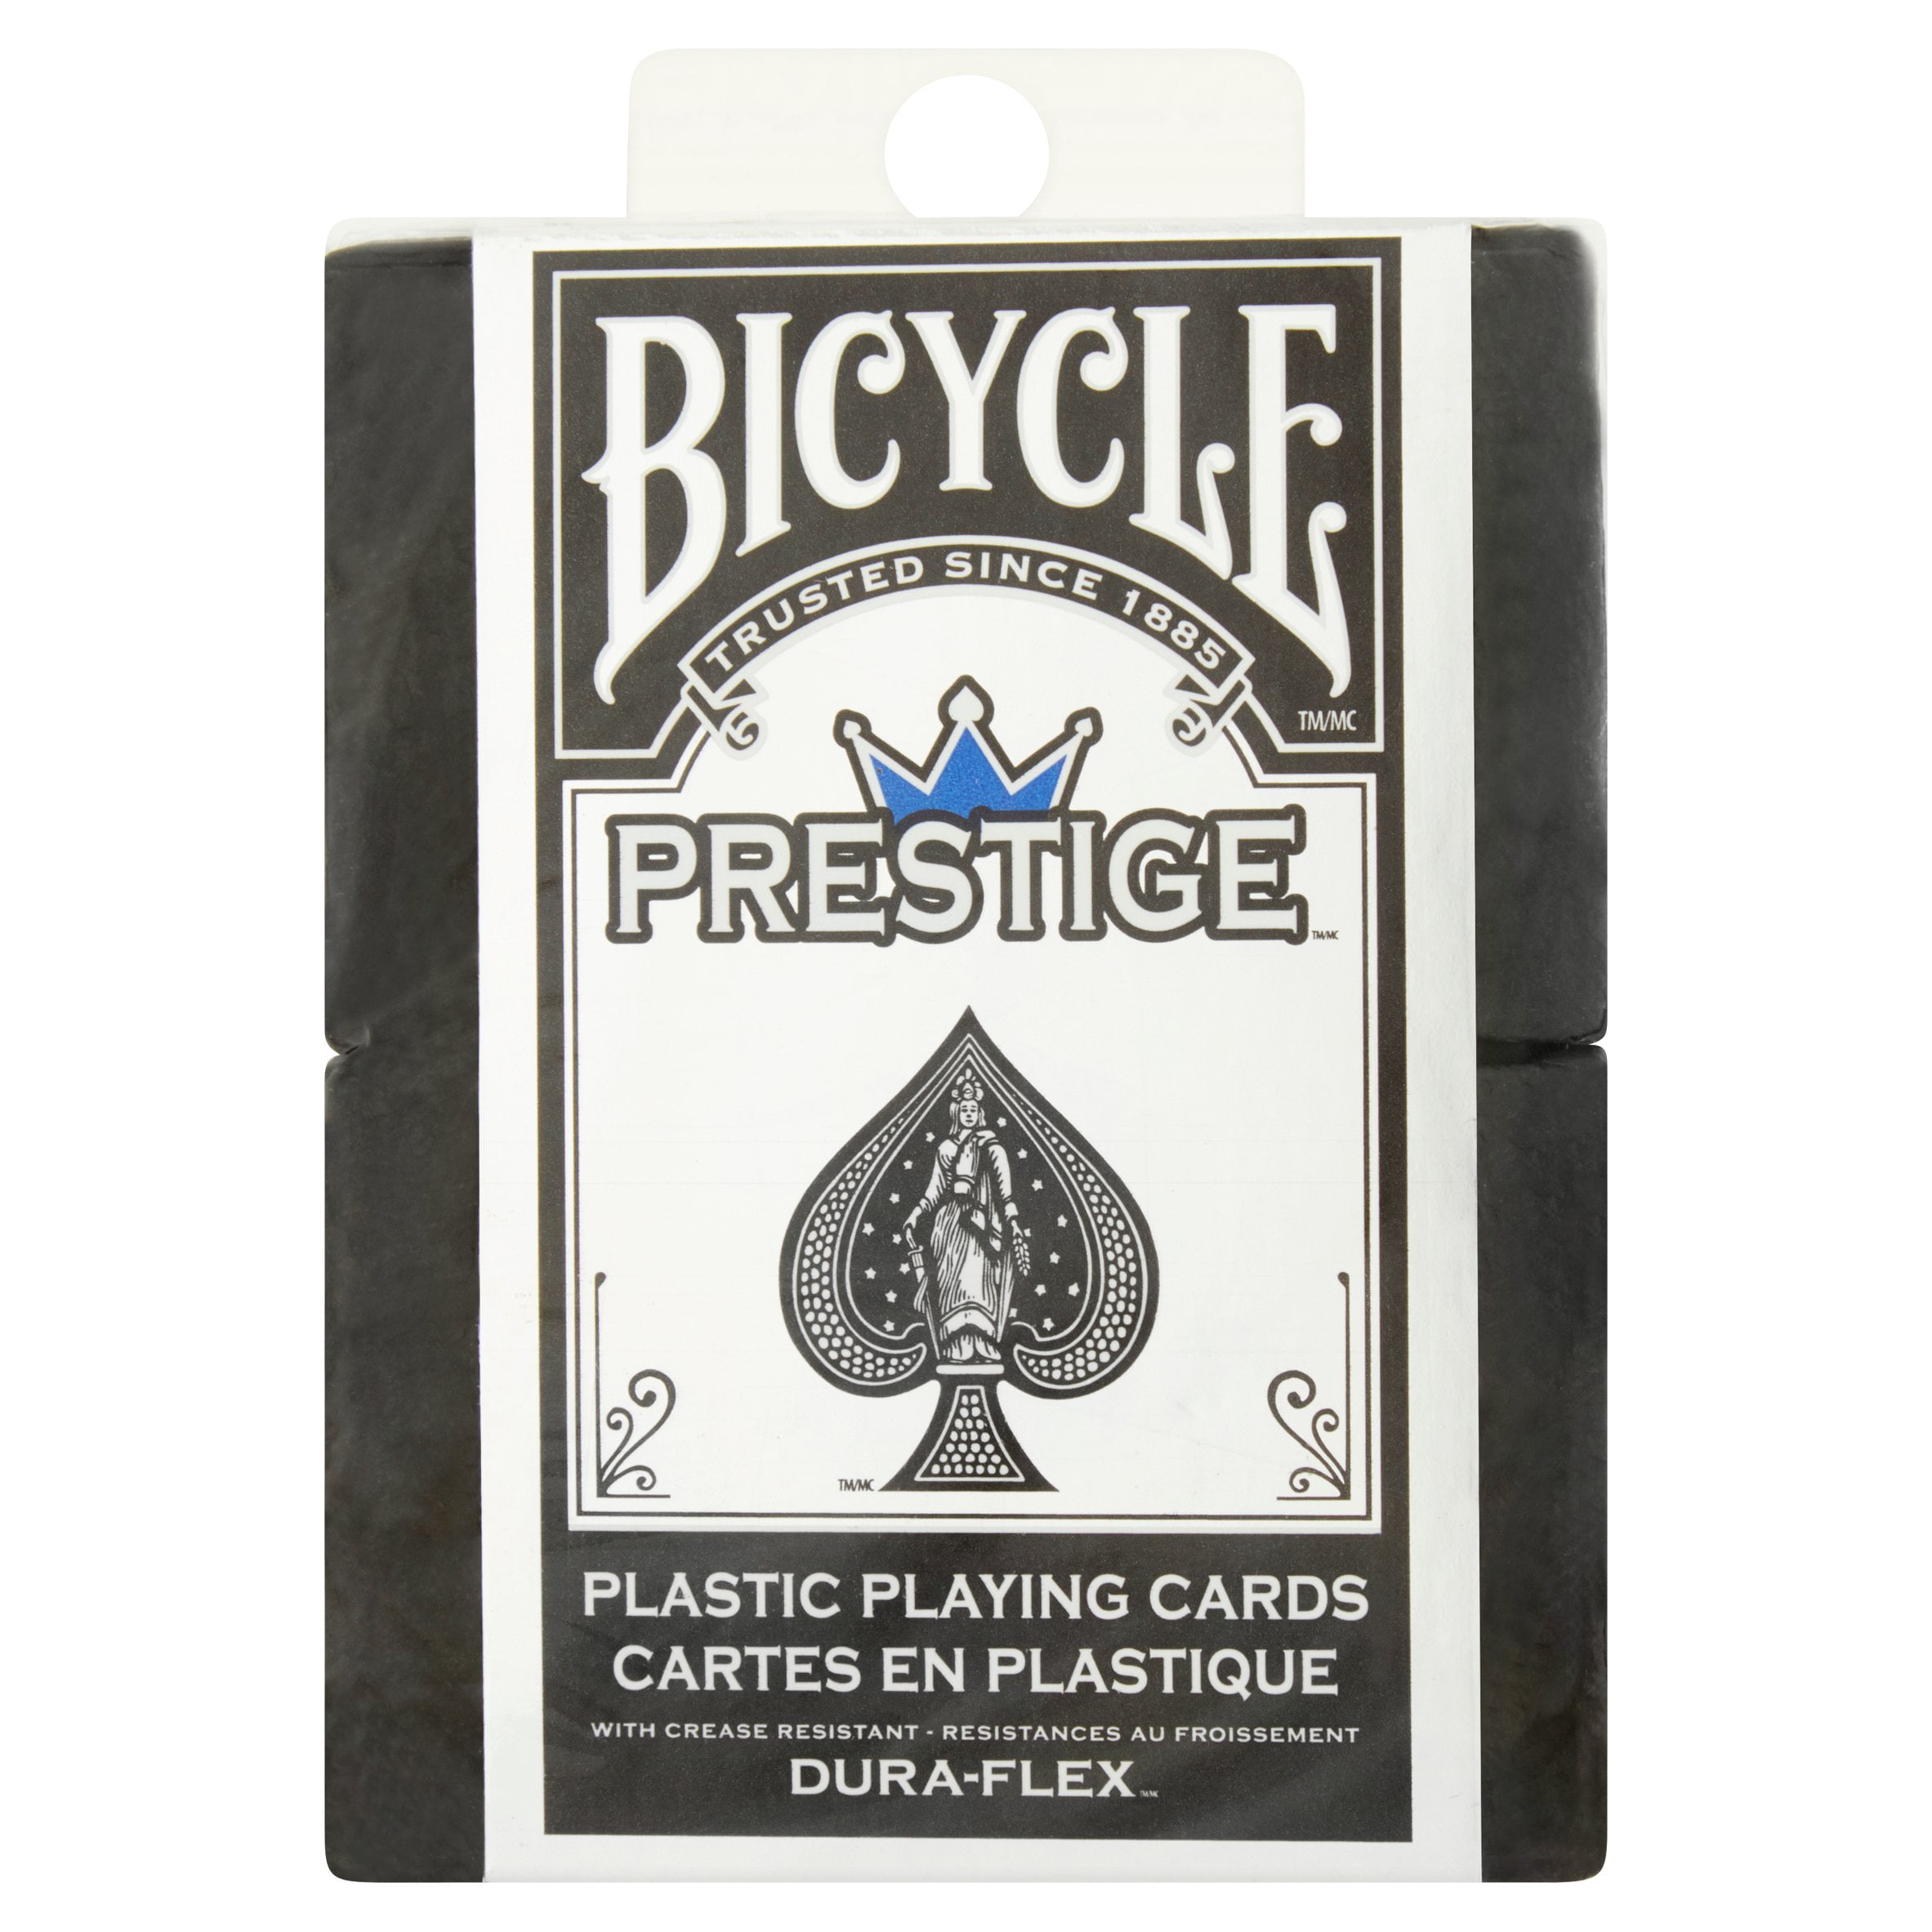 2 DECKS BICYCLE PRESTIGE 100% PLASTIC POKER PLAYING CARDS JUMBO RED BLUE NEW 